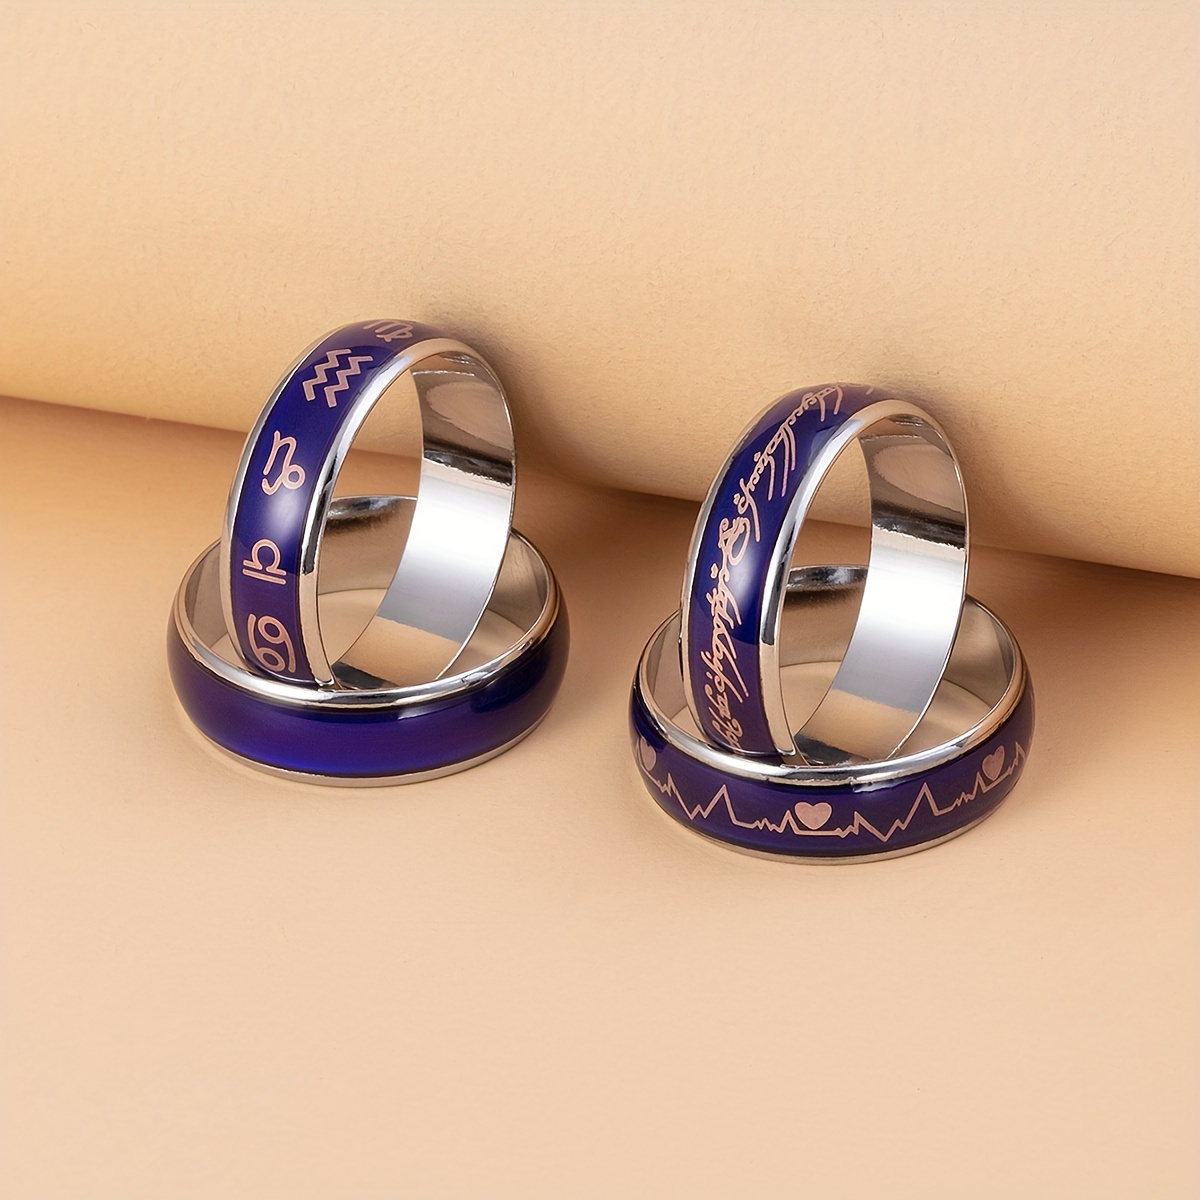 4pcs Mood Rings metal ring adjustable rings for women Mood Rings 